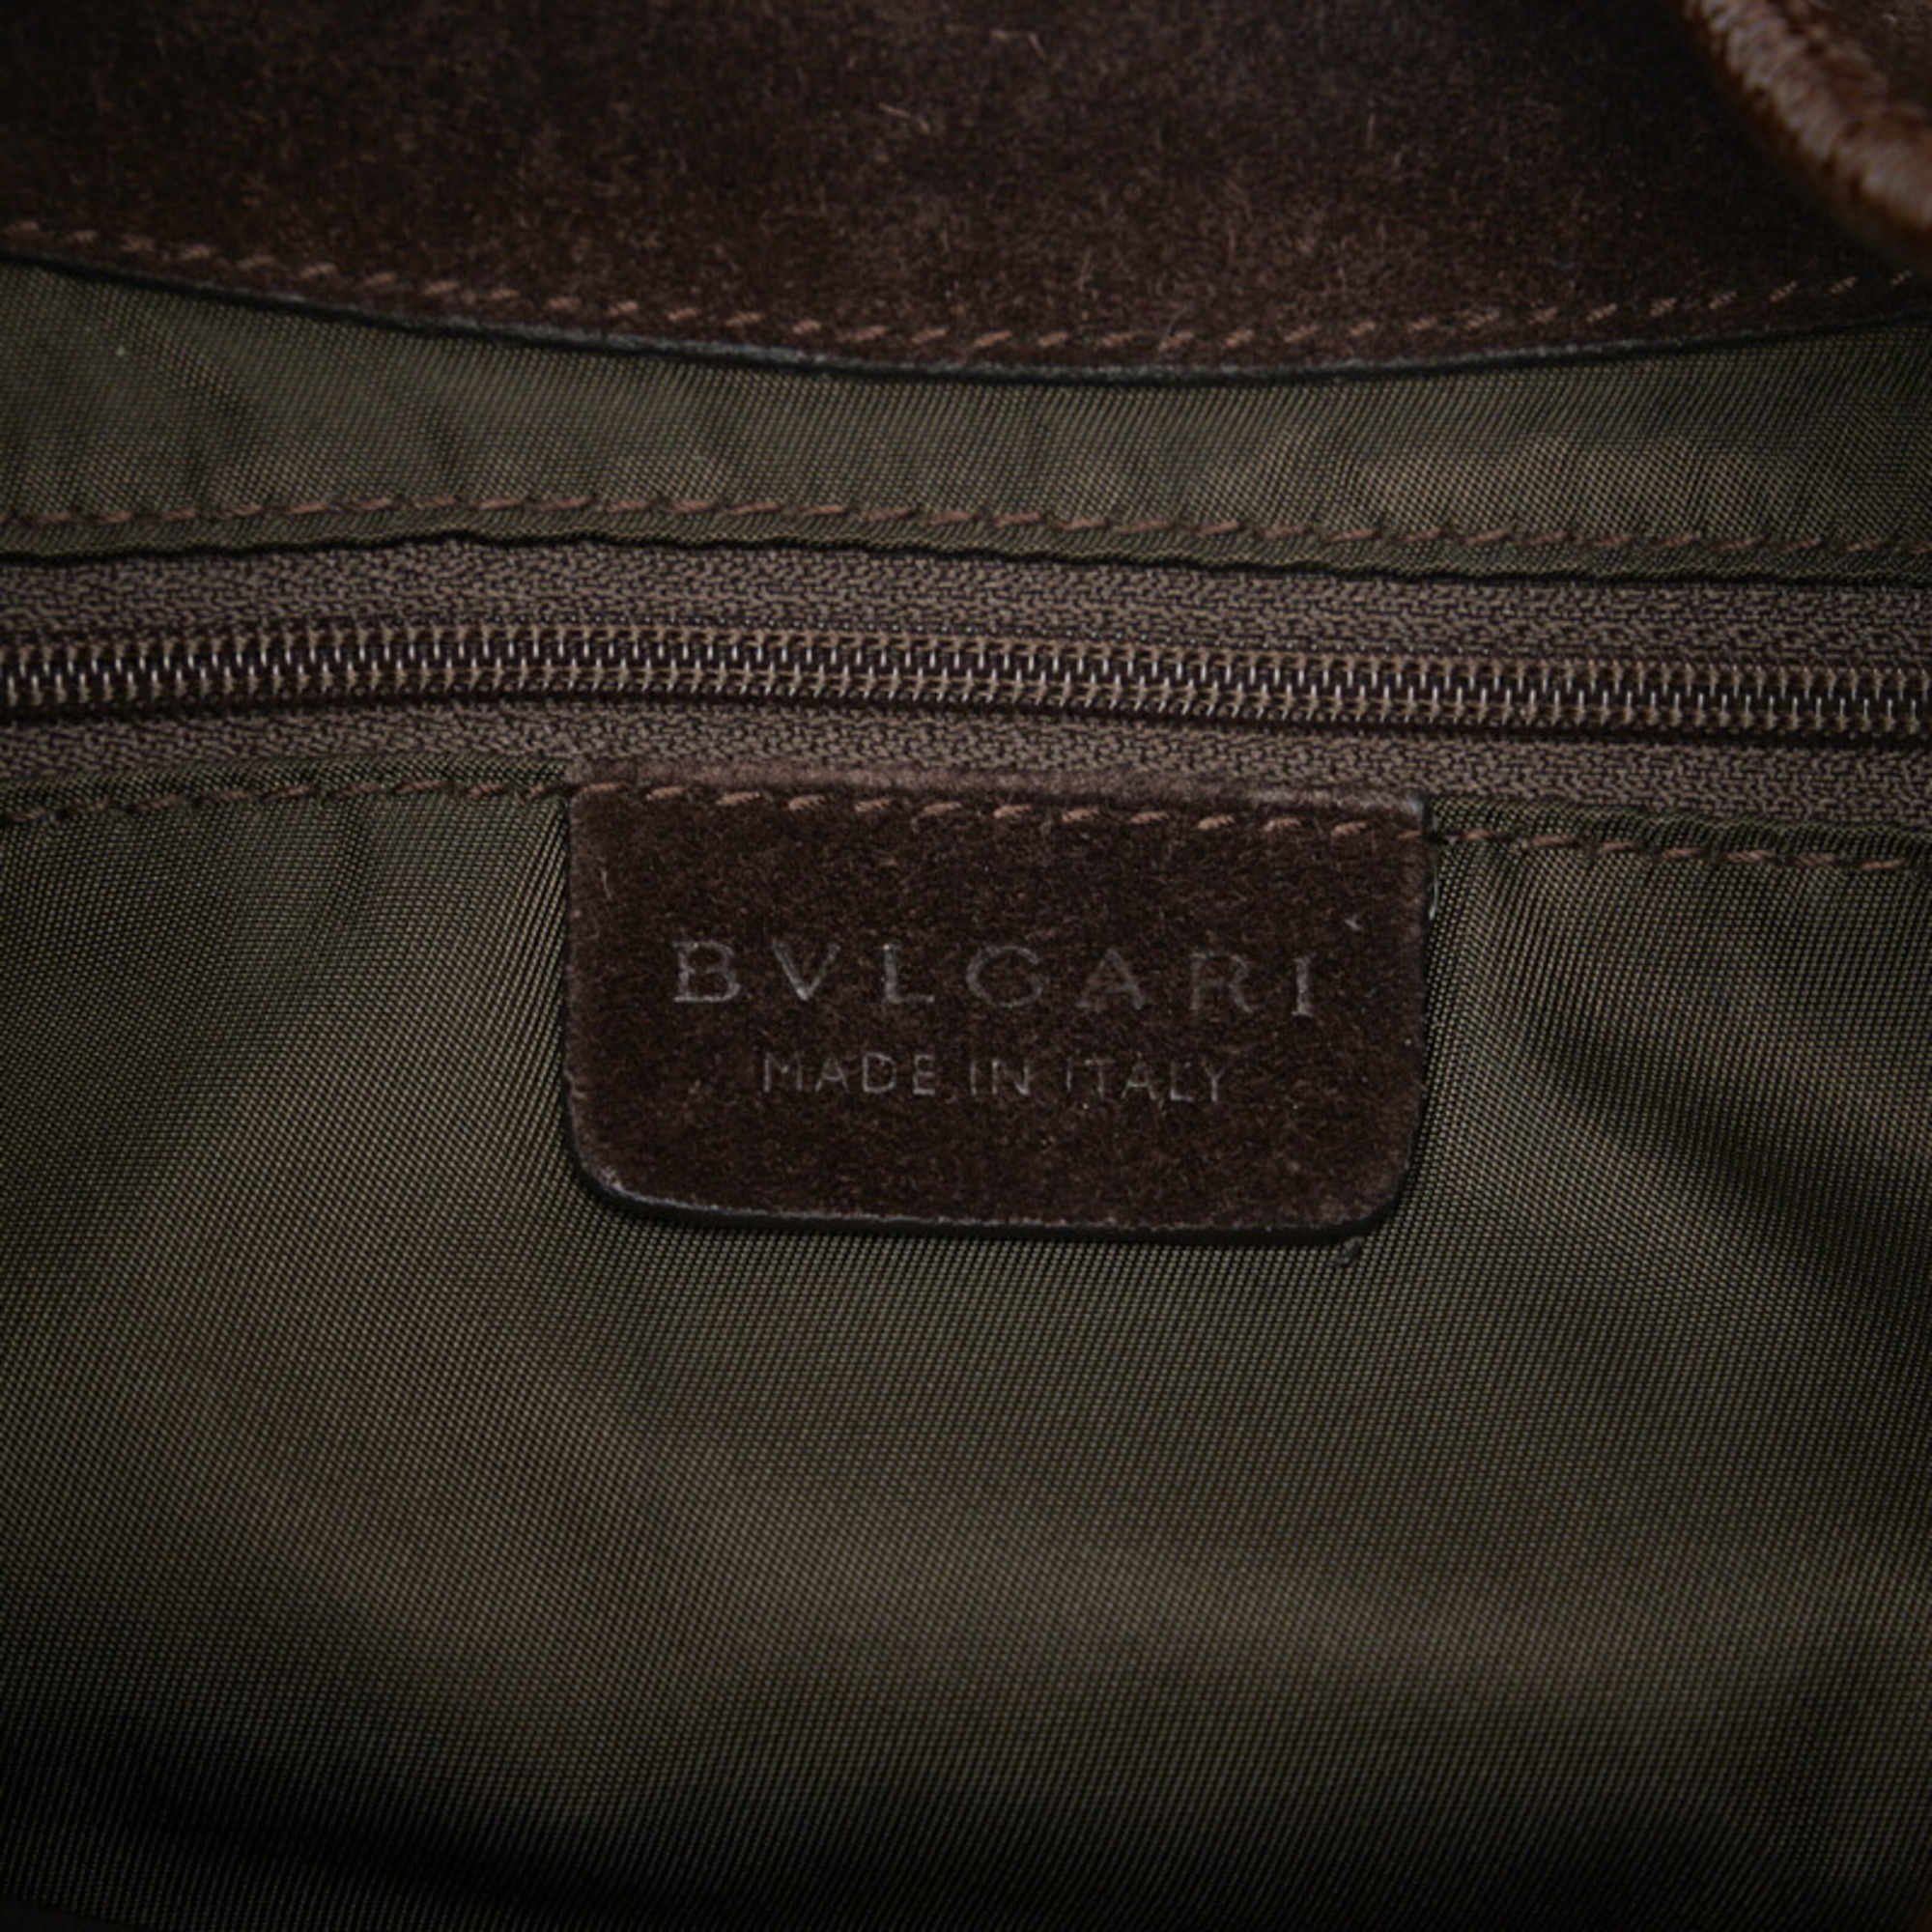 Bvlgari one shoulder bag brown canvas leather ladies BVLGARI